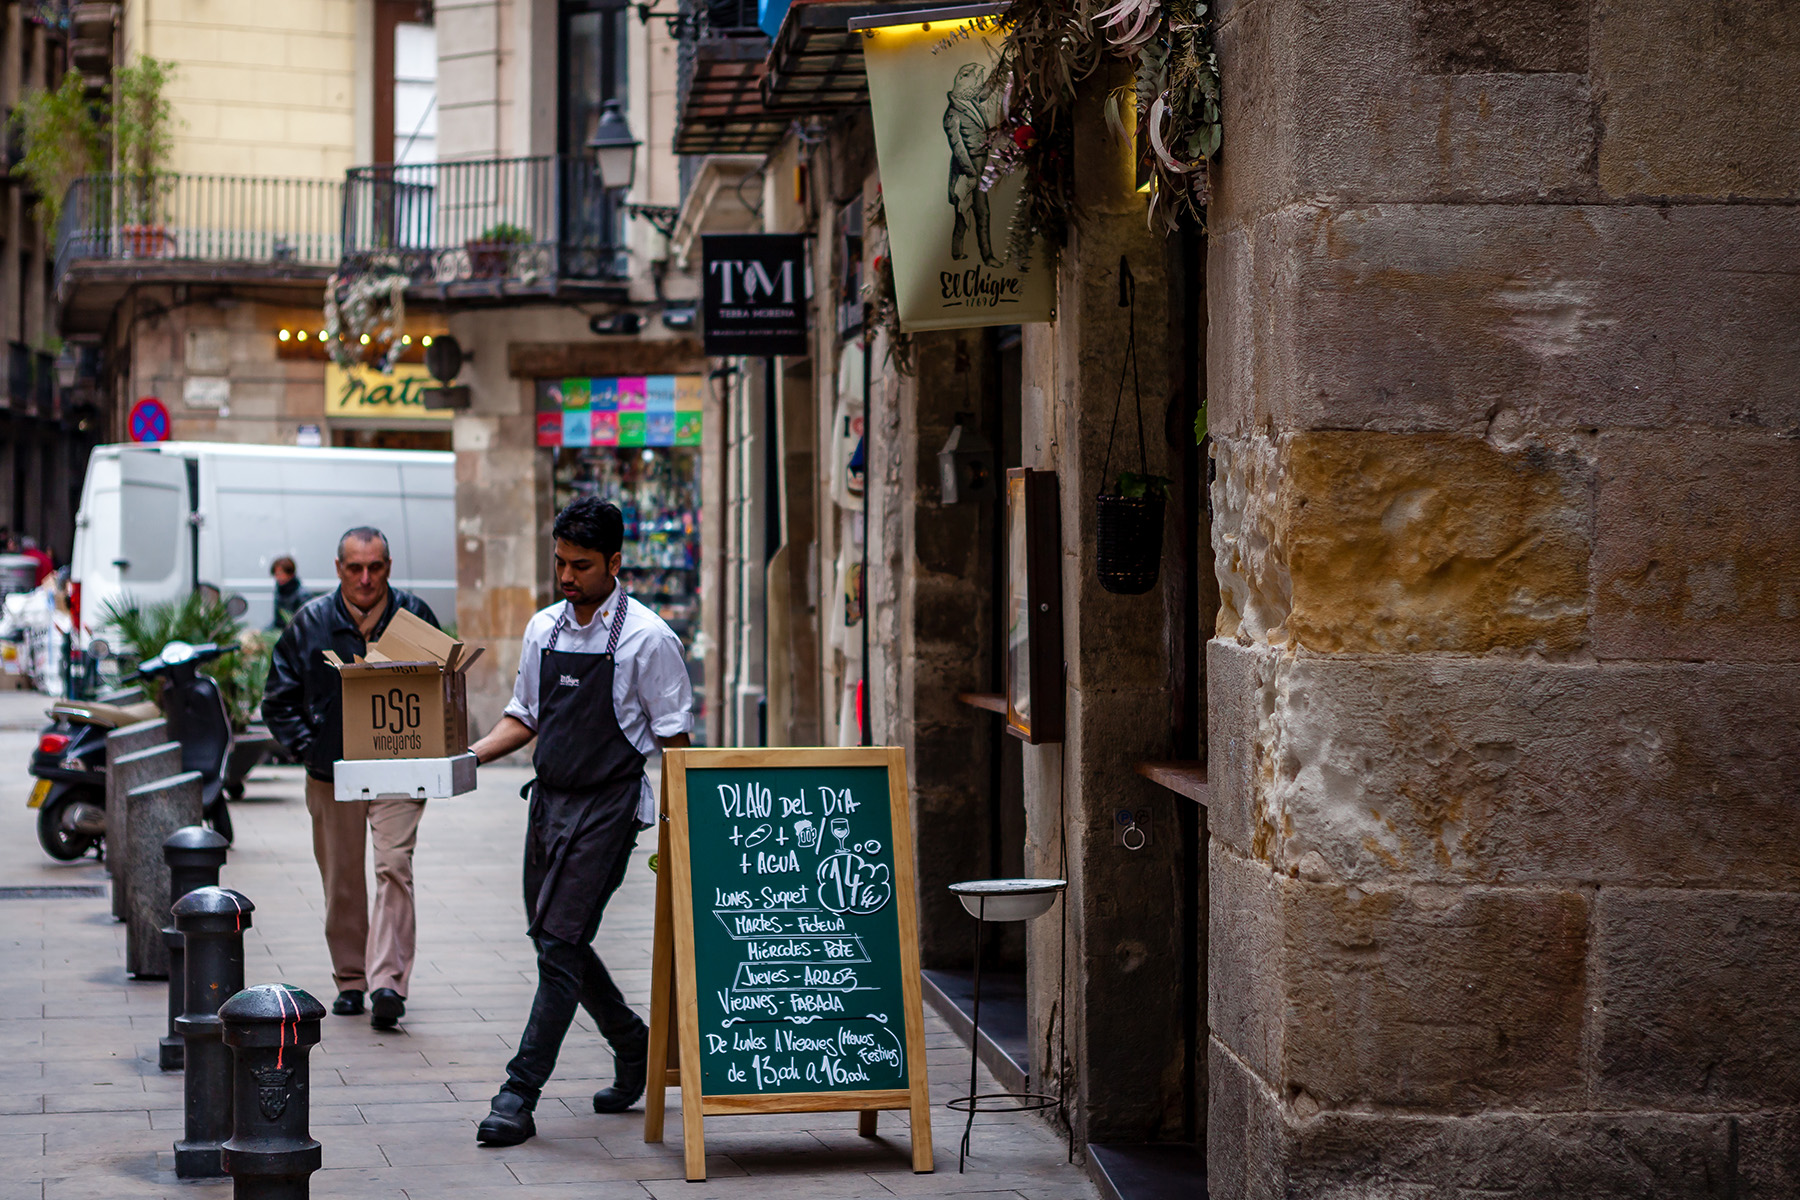 Restaurants and bars in El Raval, Barcelona